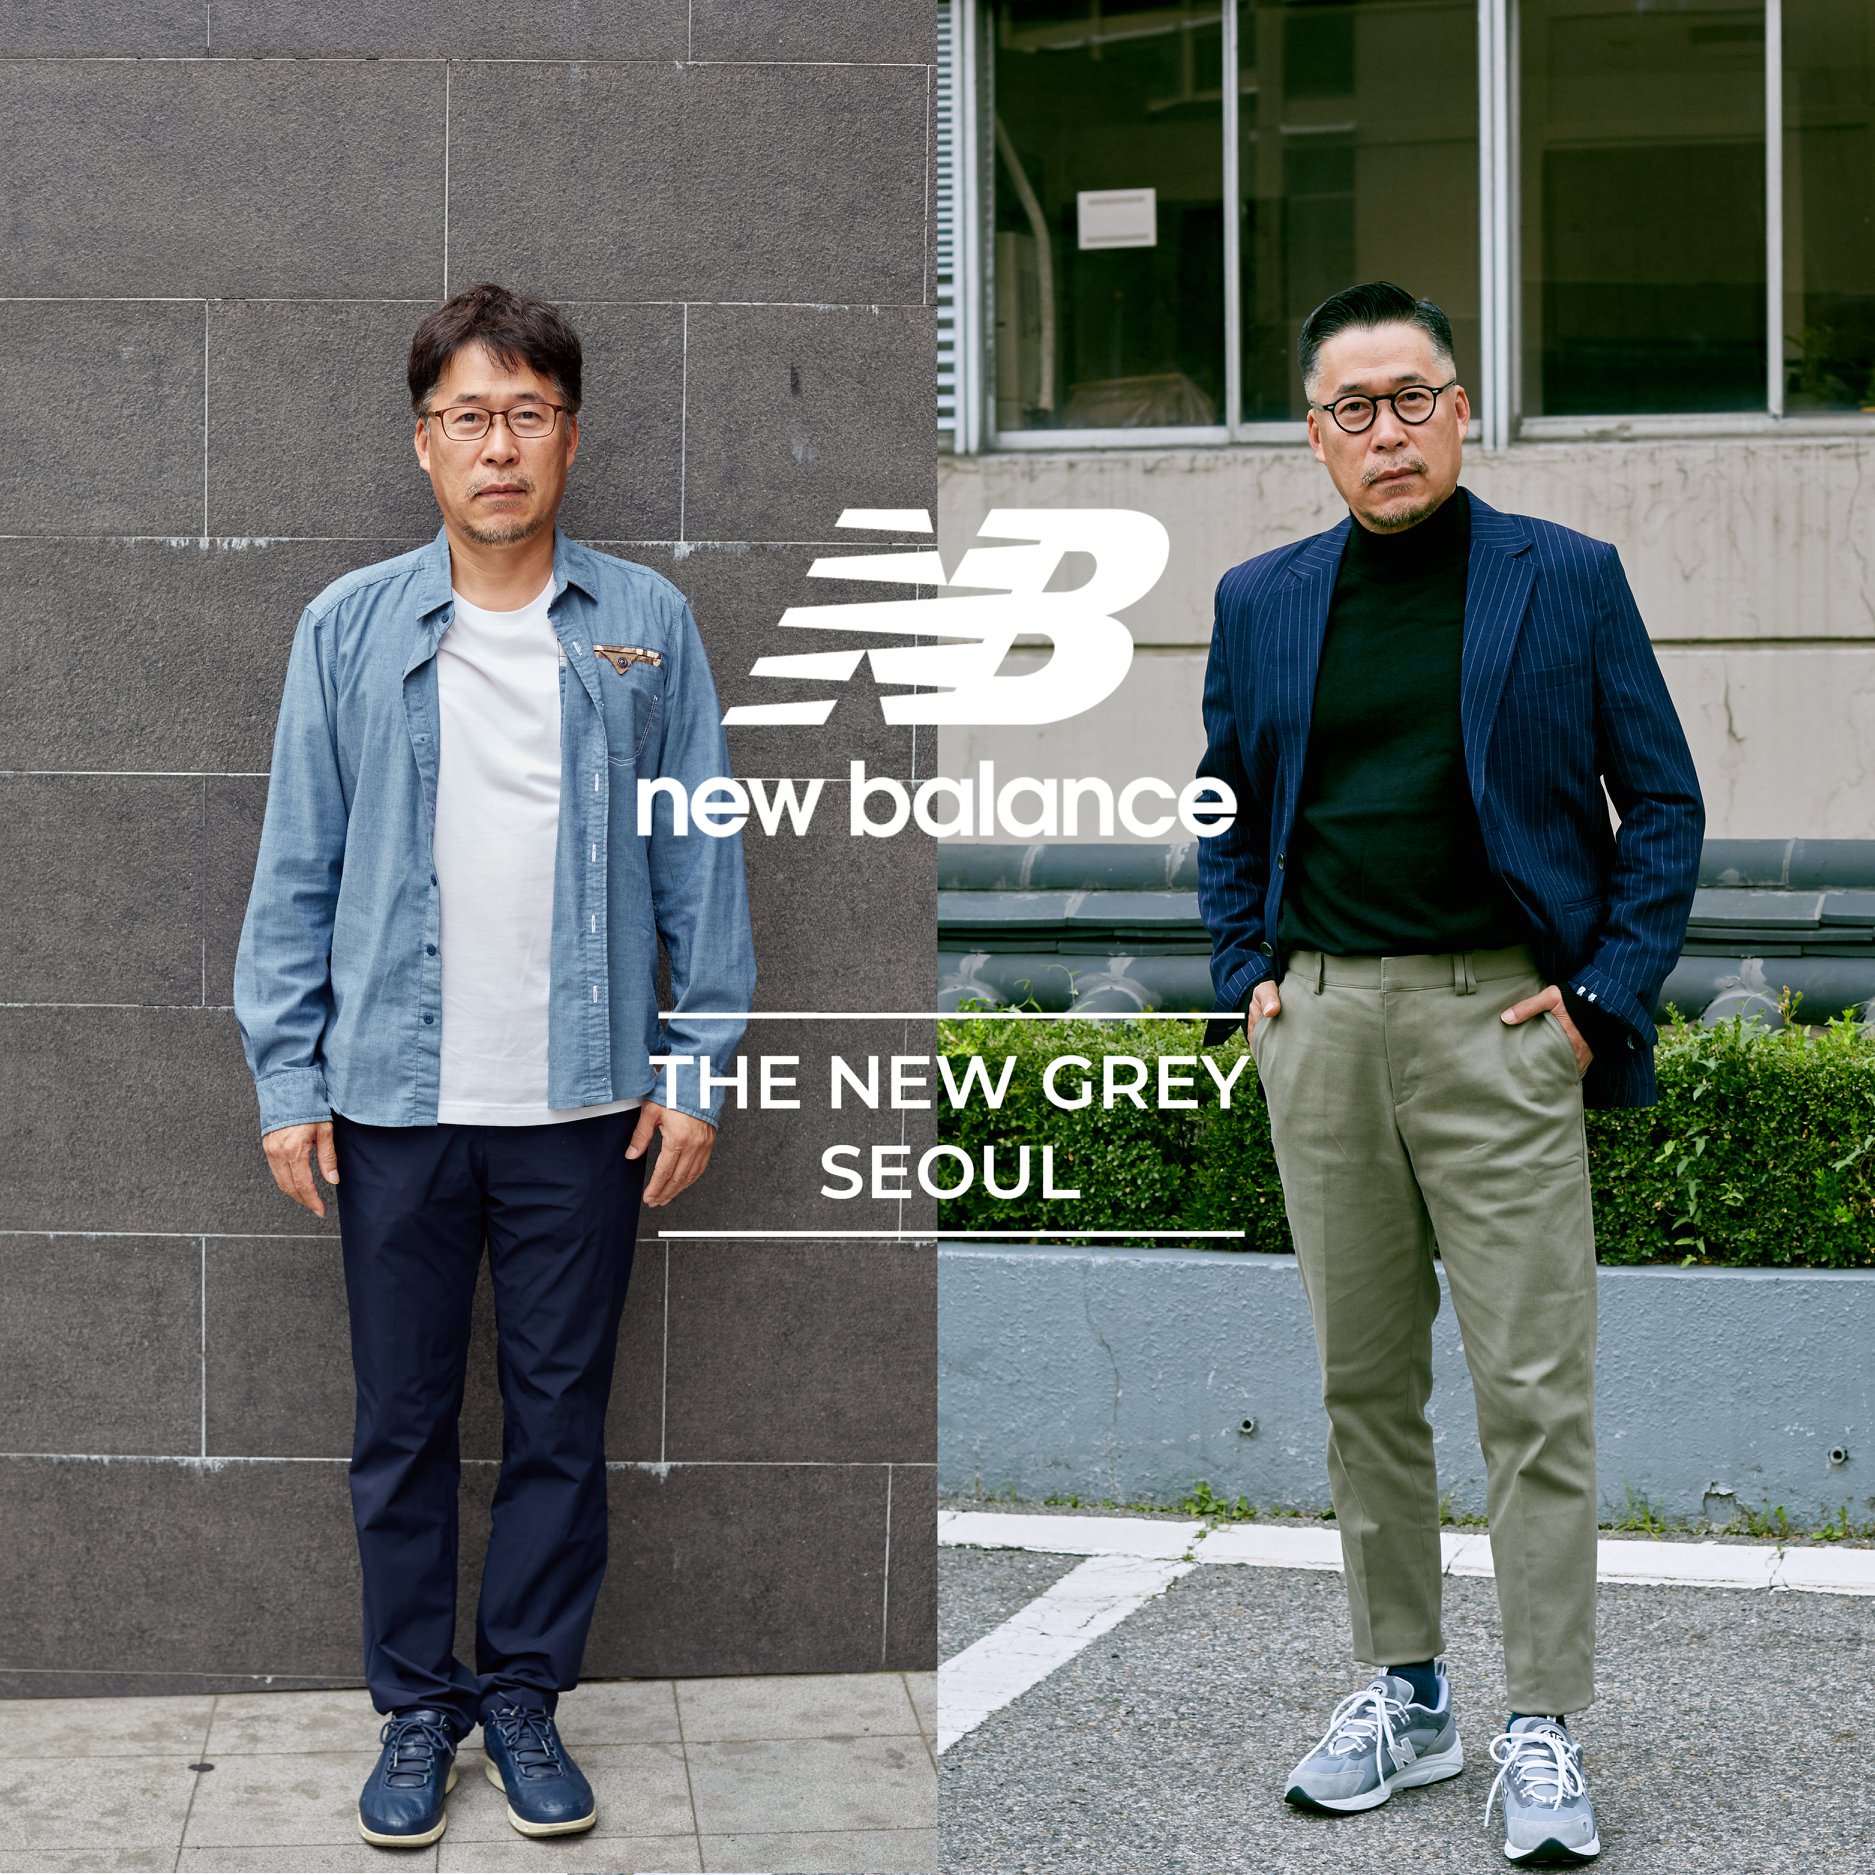 New Balance - The New Grey Seoul